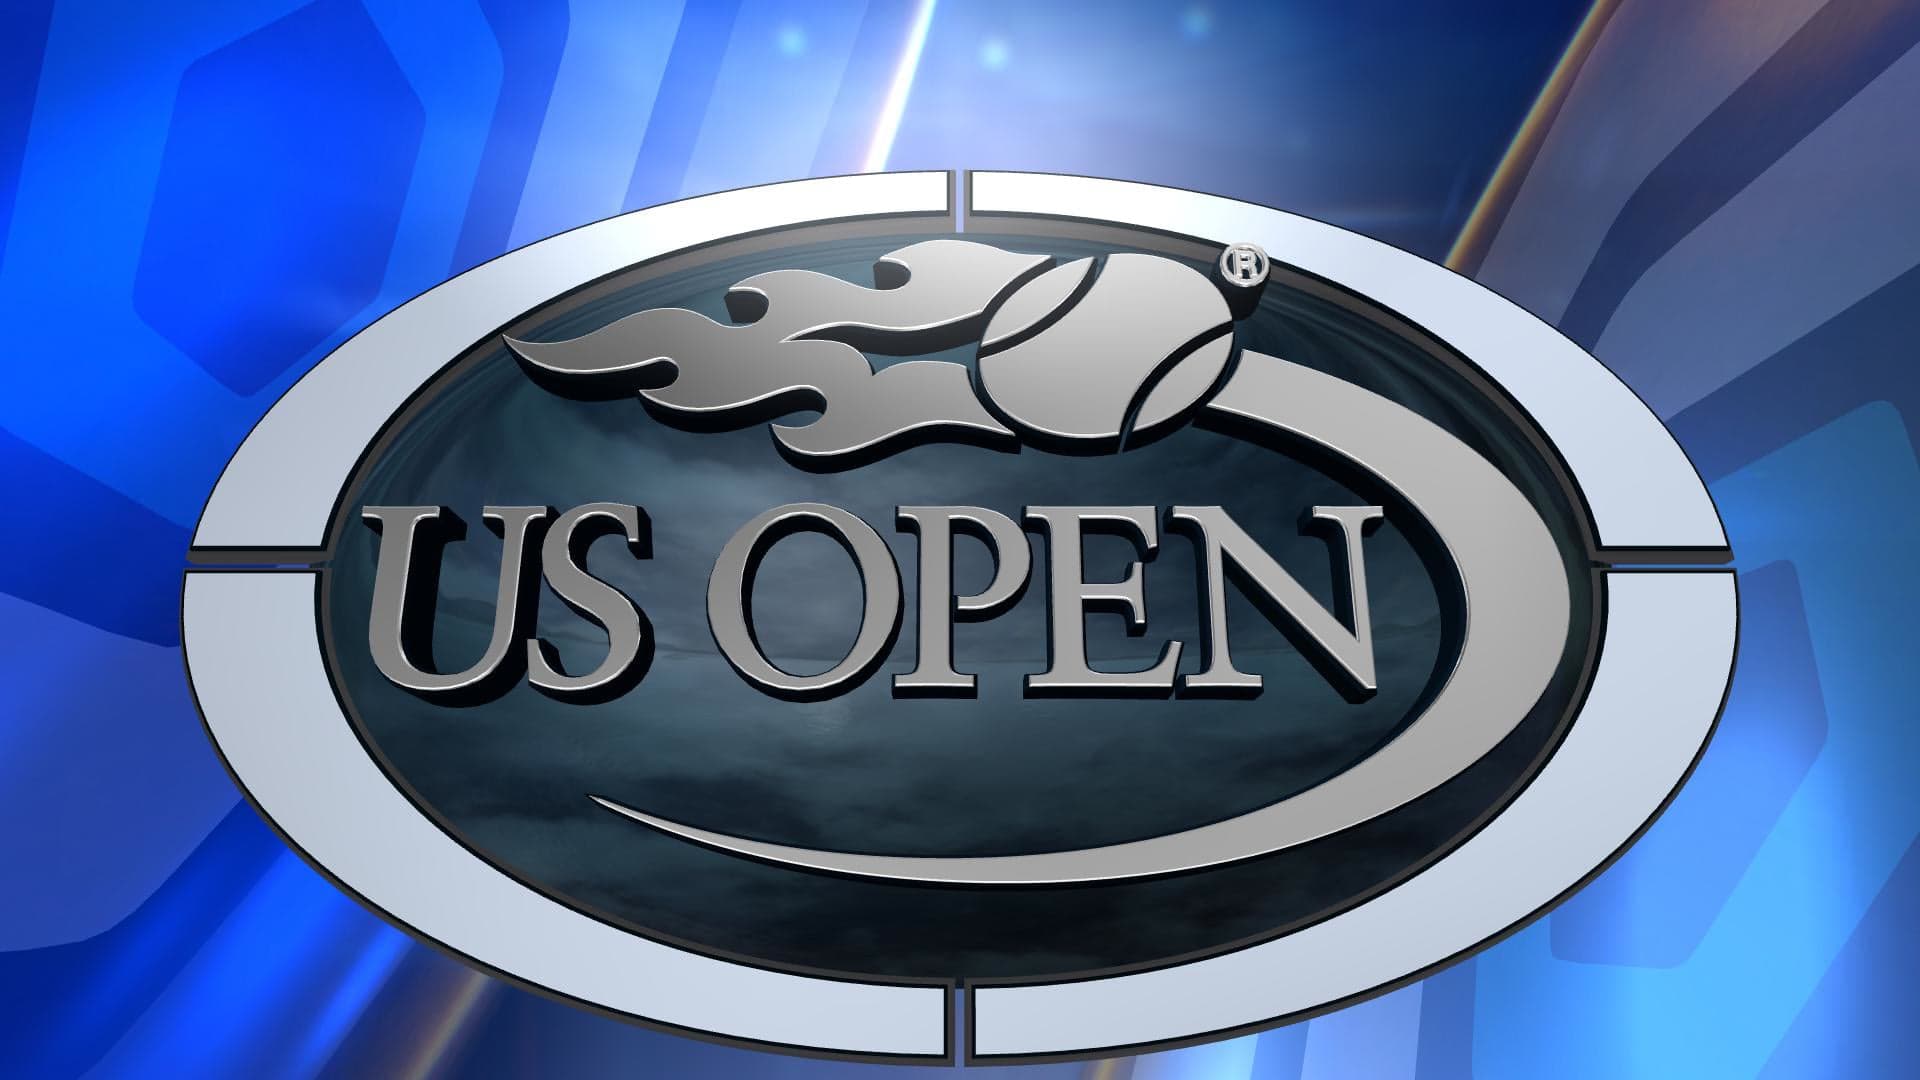 Girraphic 2013 Fox Sports US Open Tennis Touchscreen